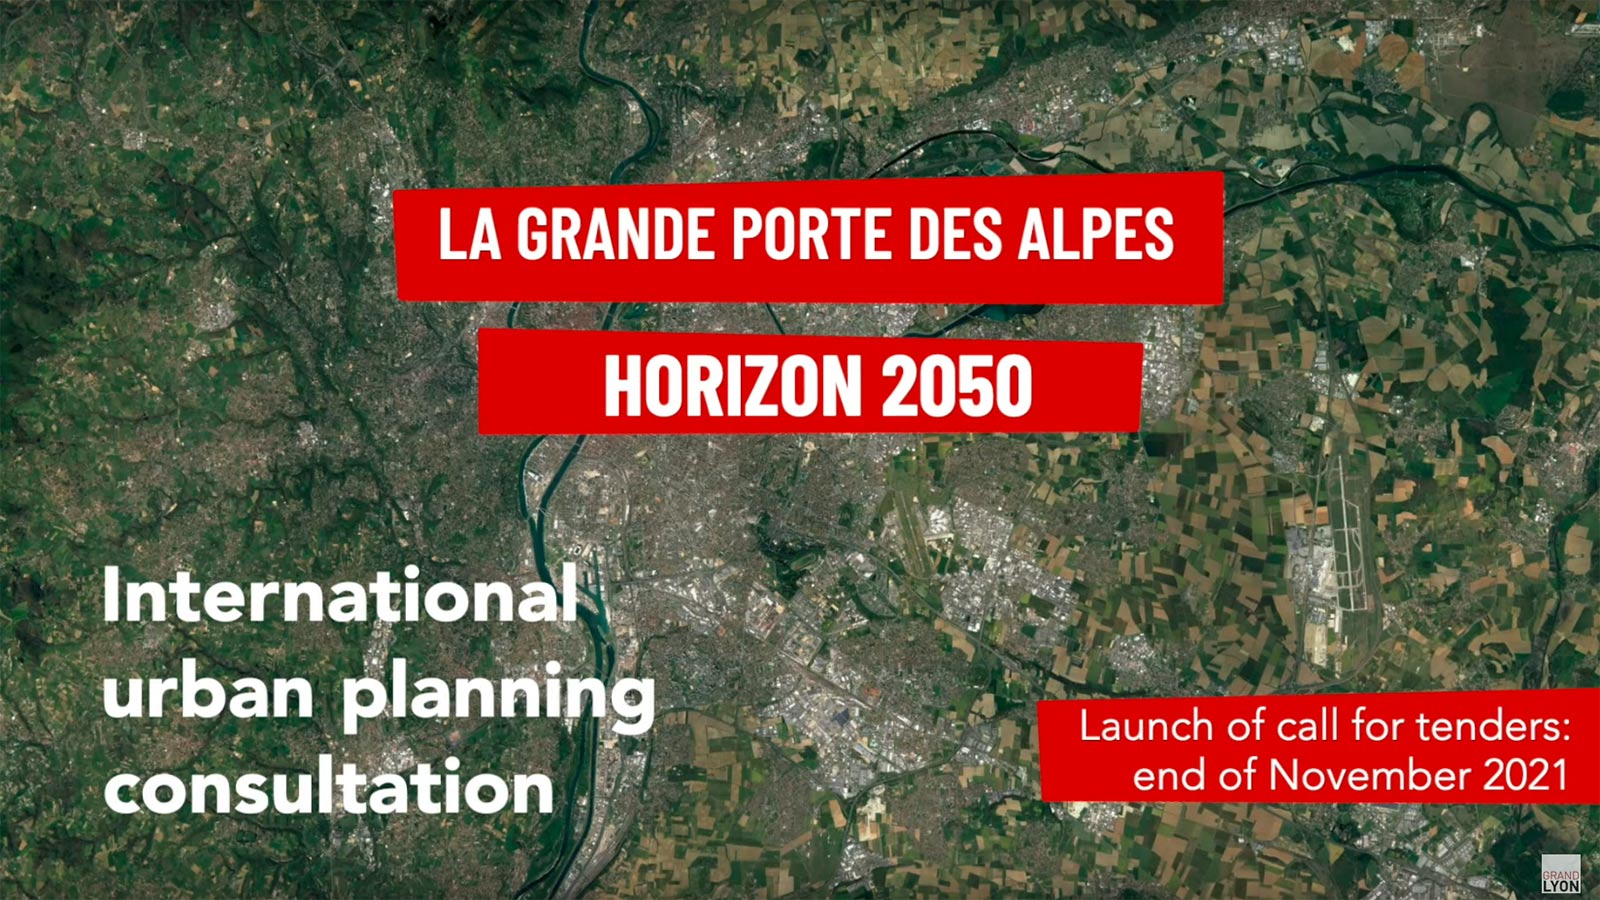 Launch of the Grande Porte des Alpes 2050 international town planning consultation